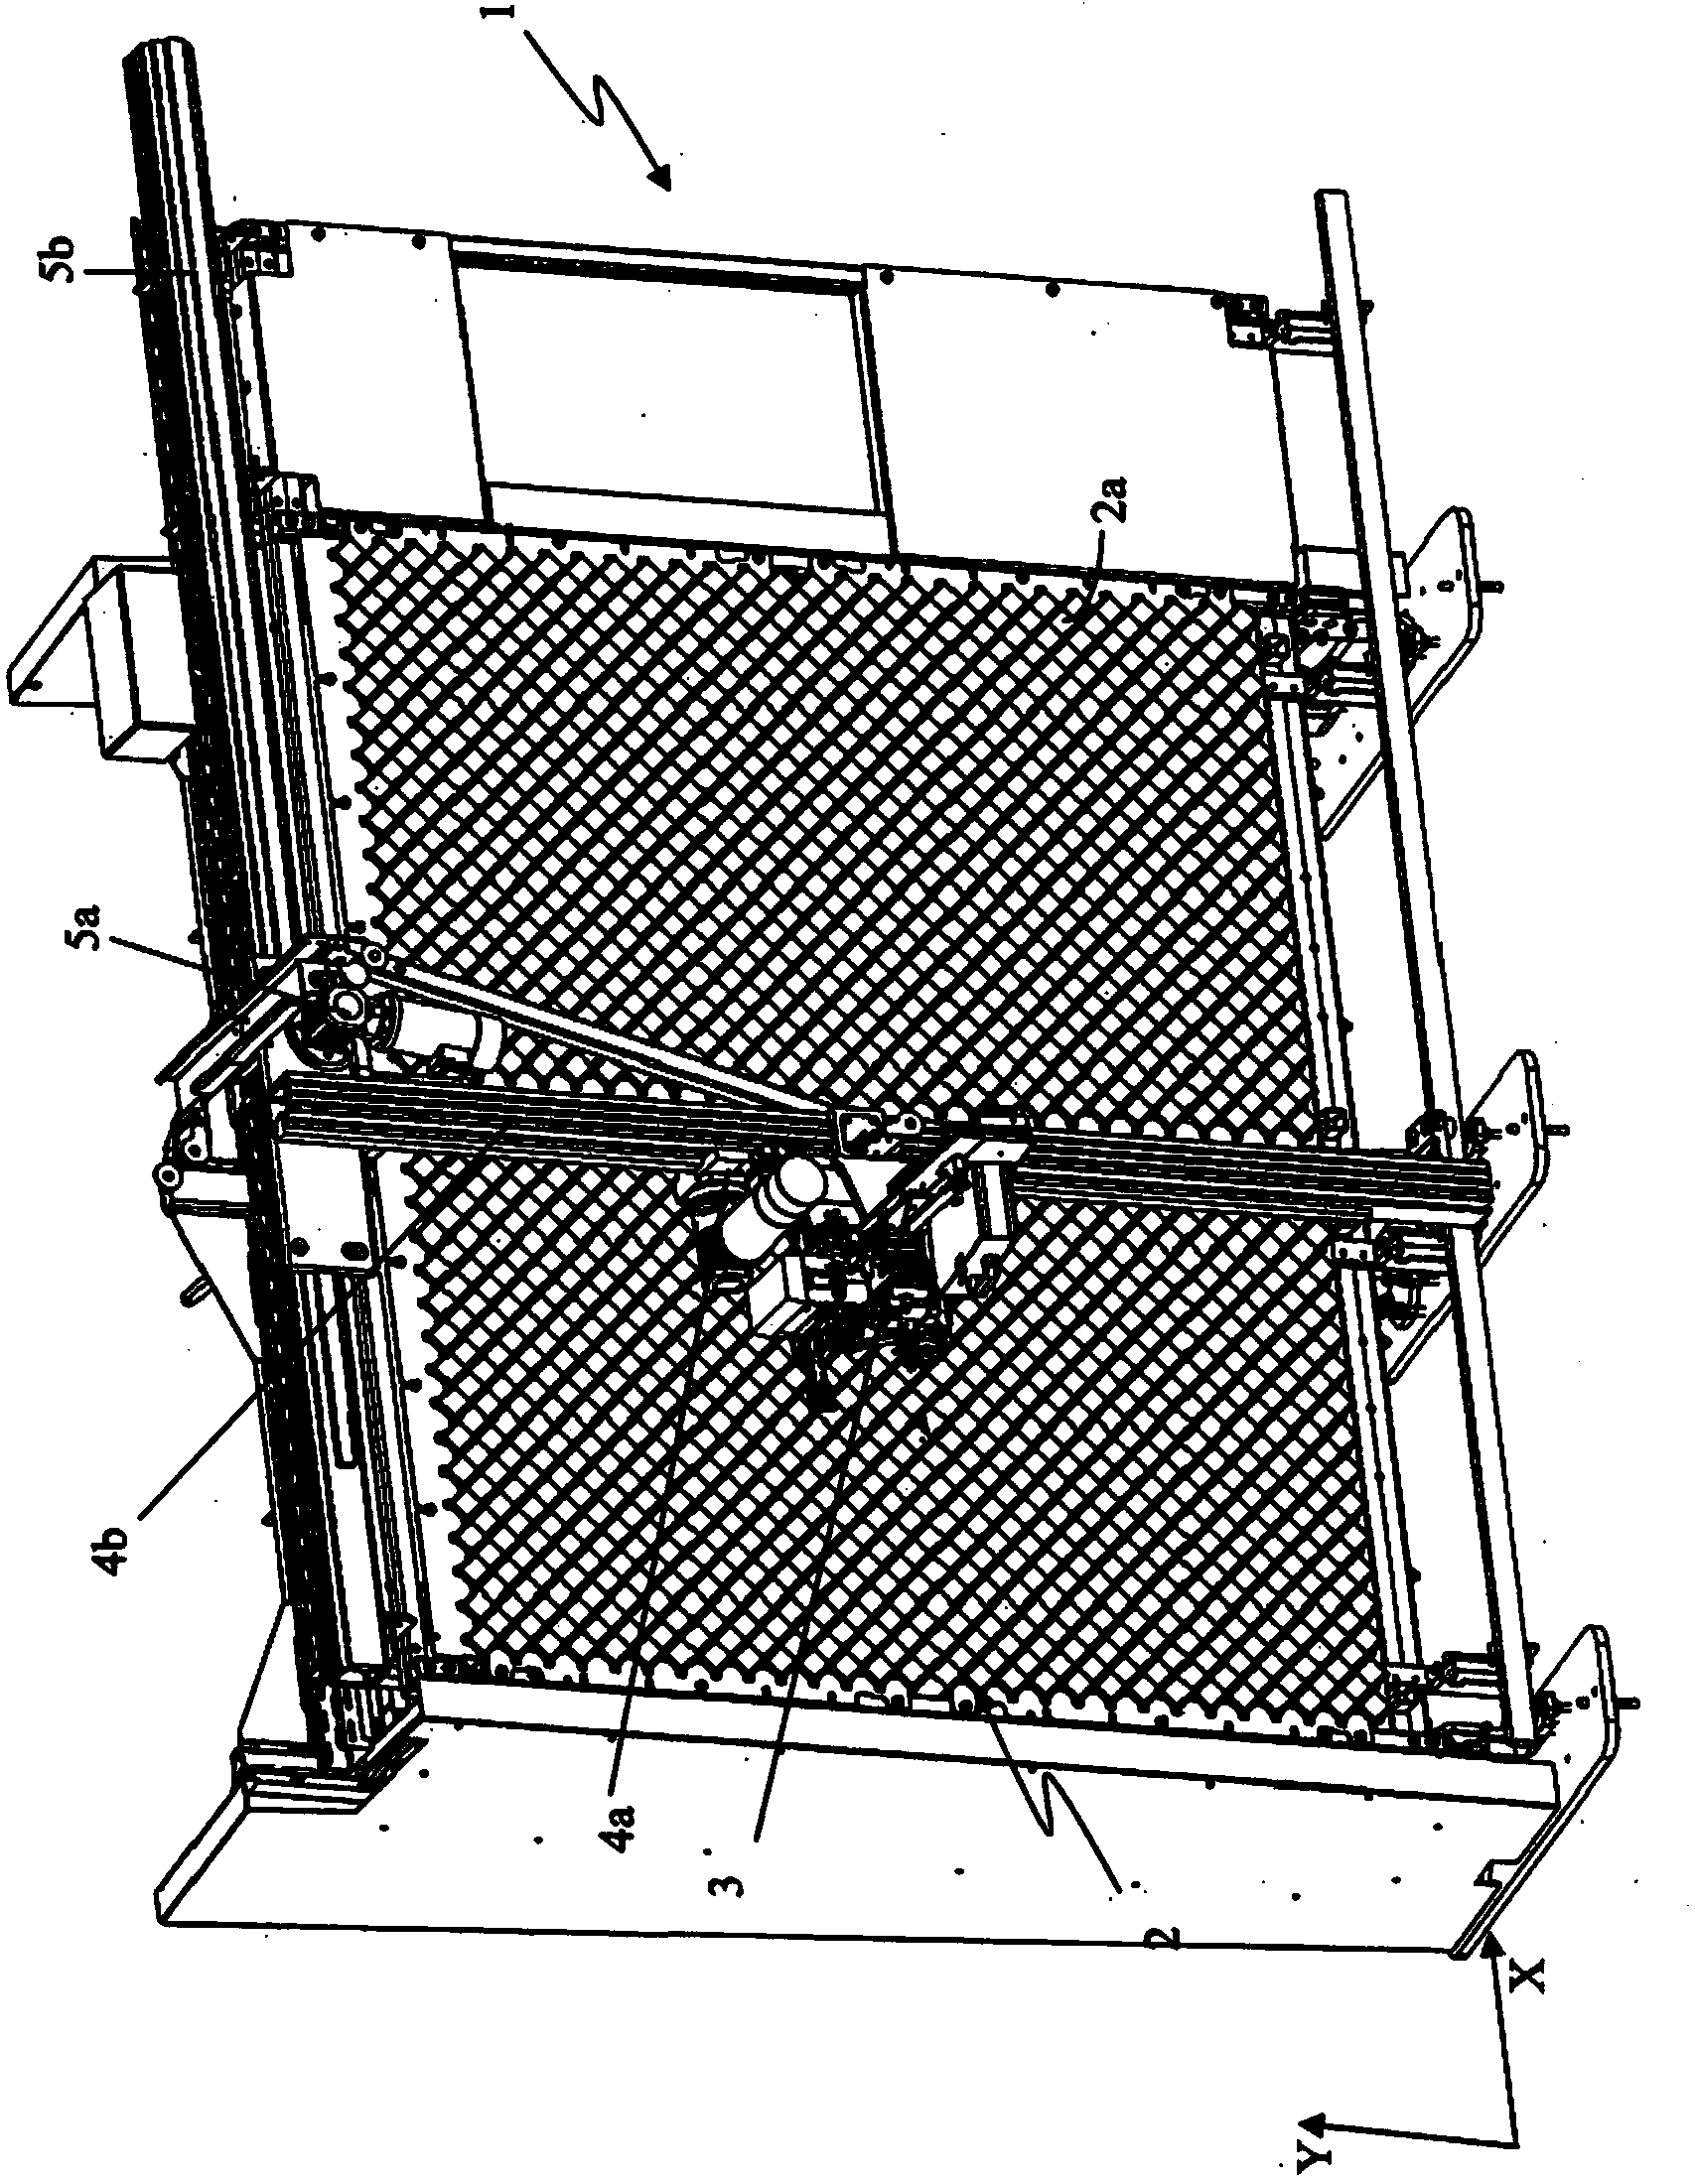 Yarn storage device for a textile machine